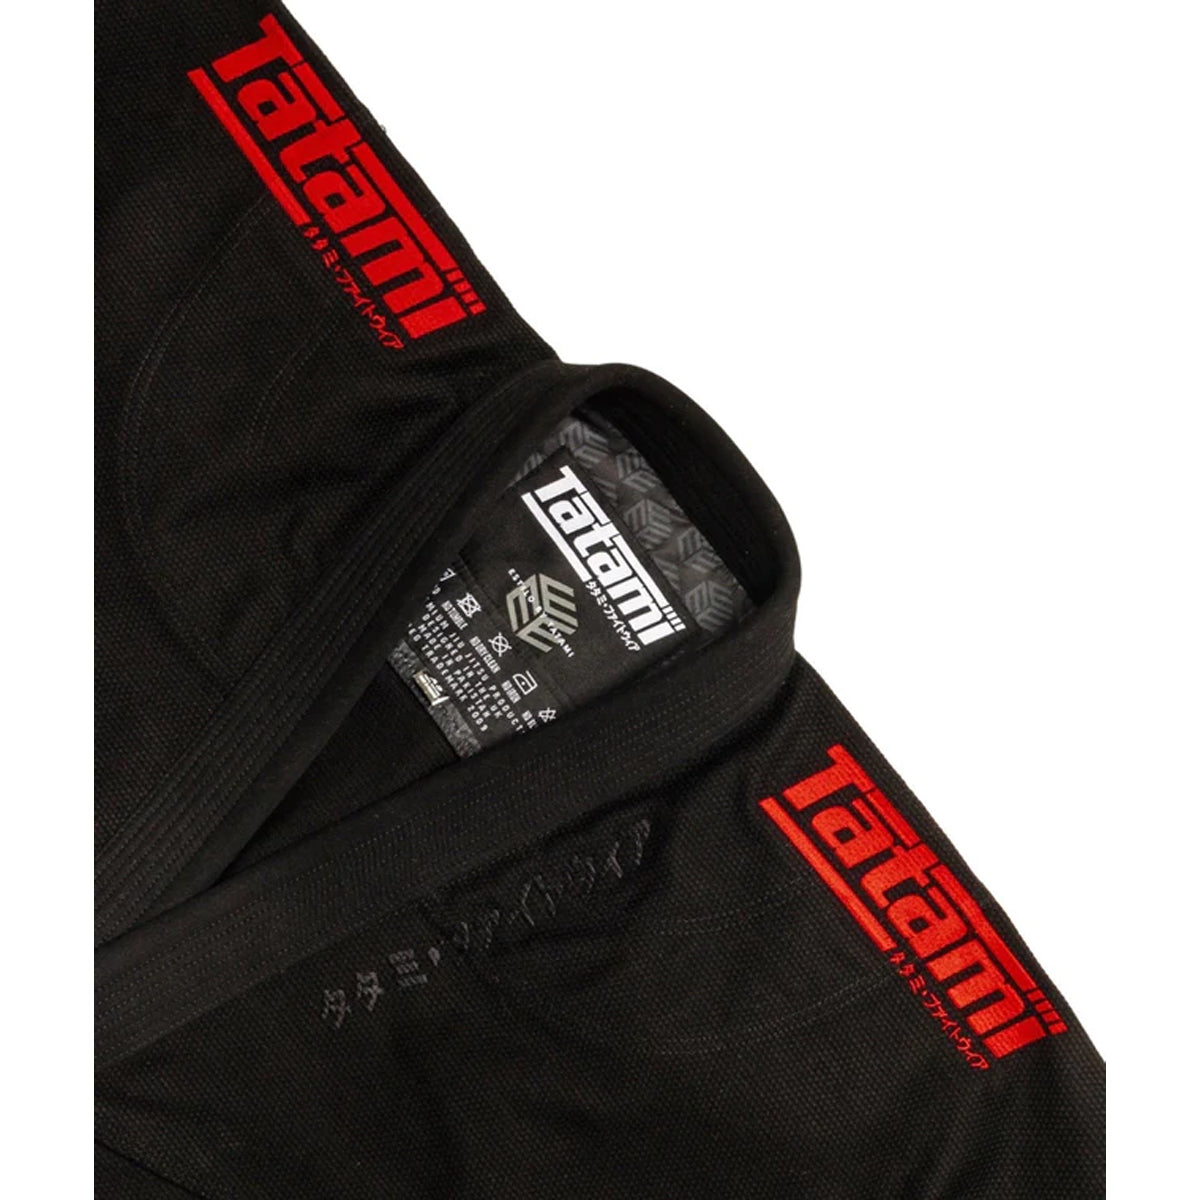 Tatami Fightwear Estilo Black Label BJJ Gi - Red/Black Tatami Fightwear